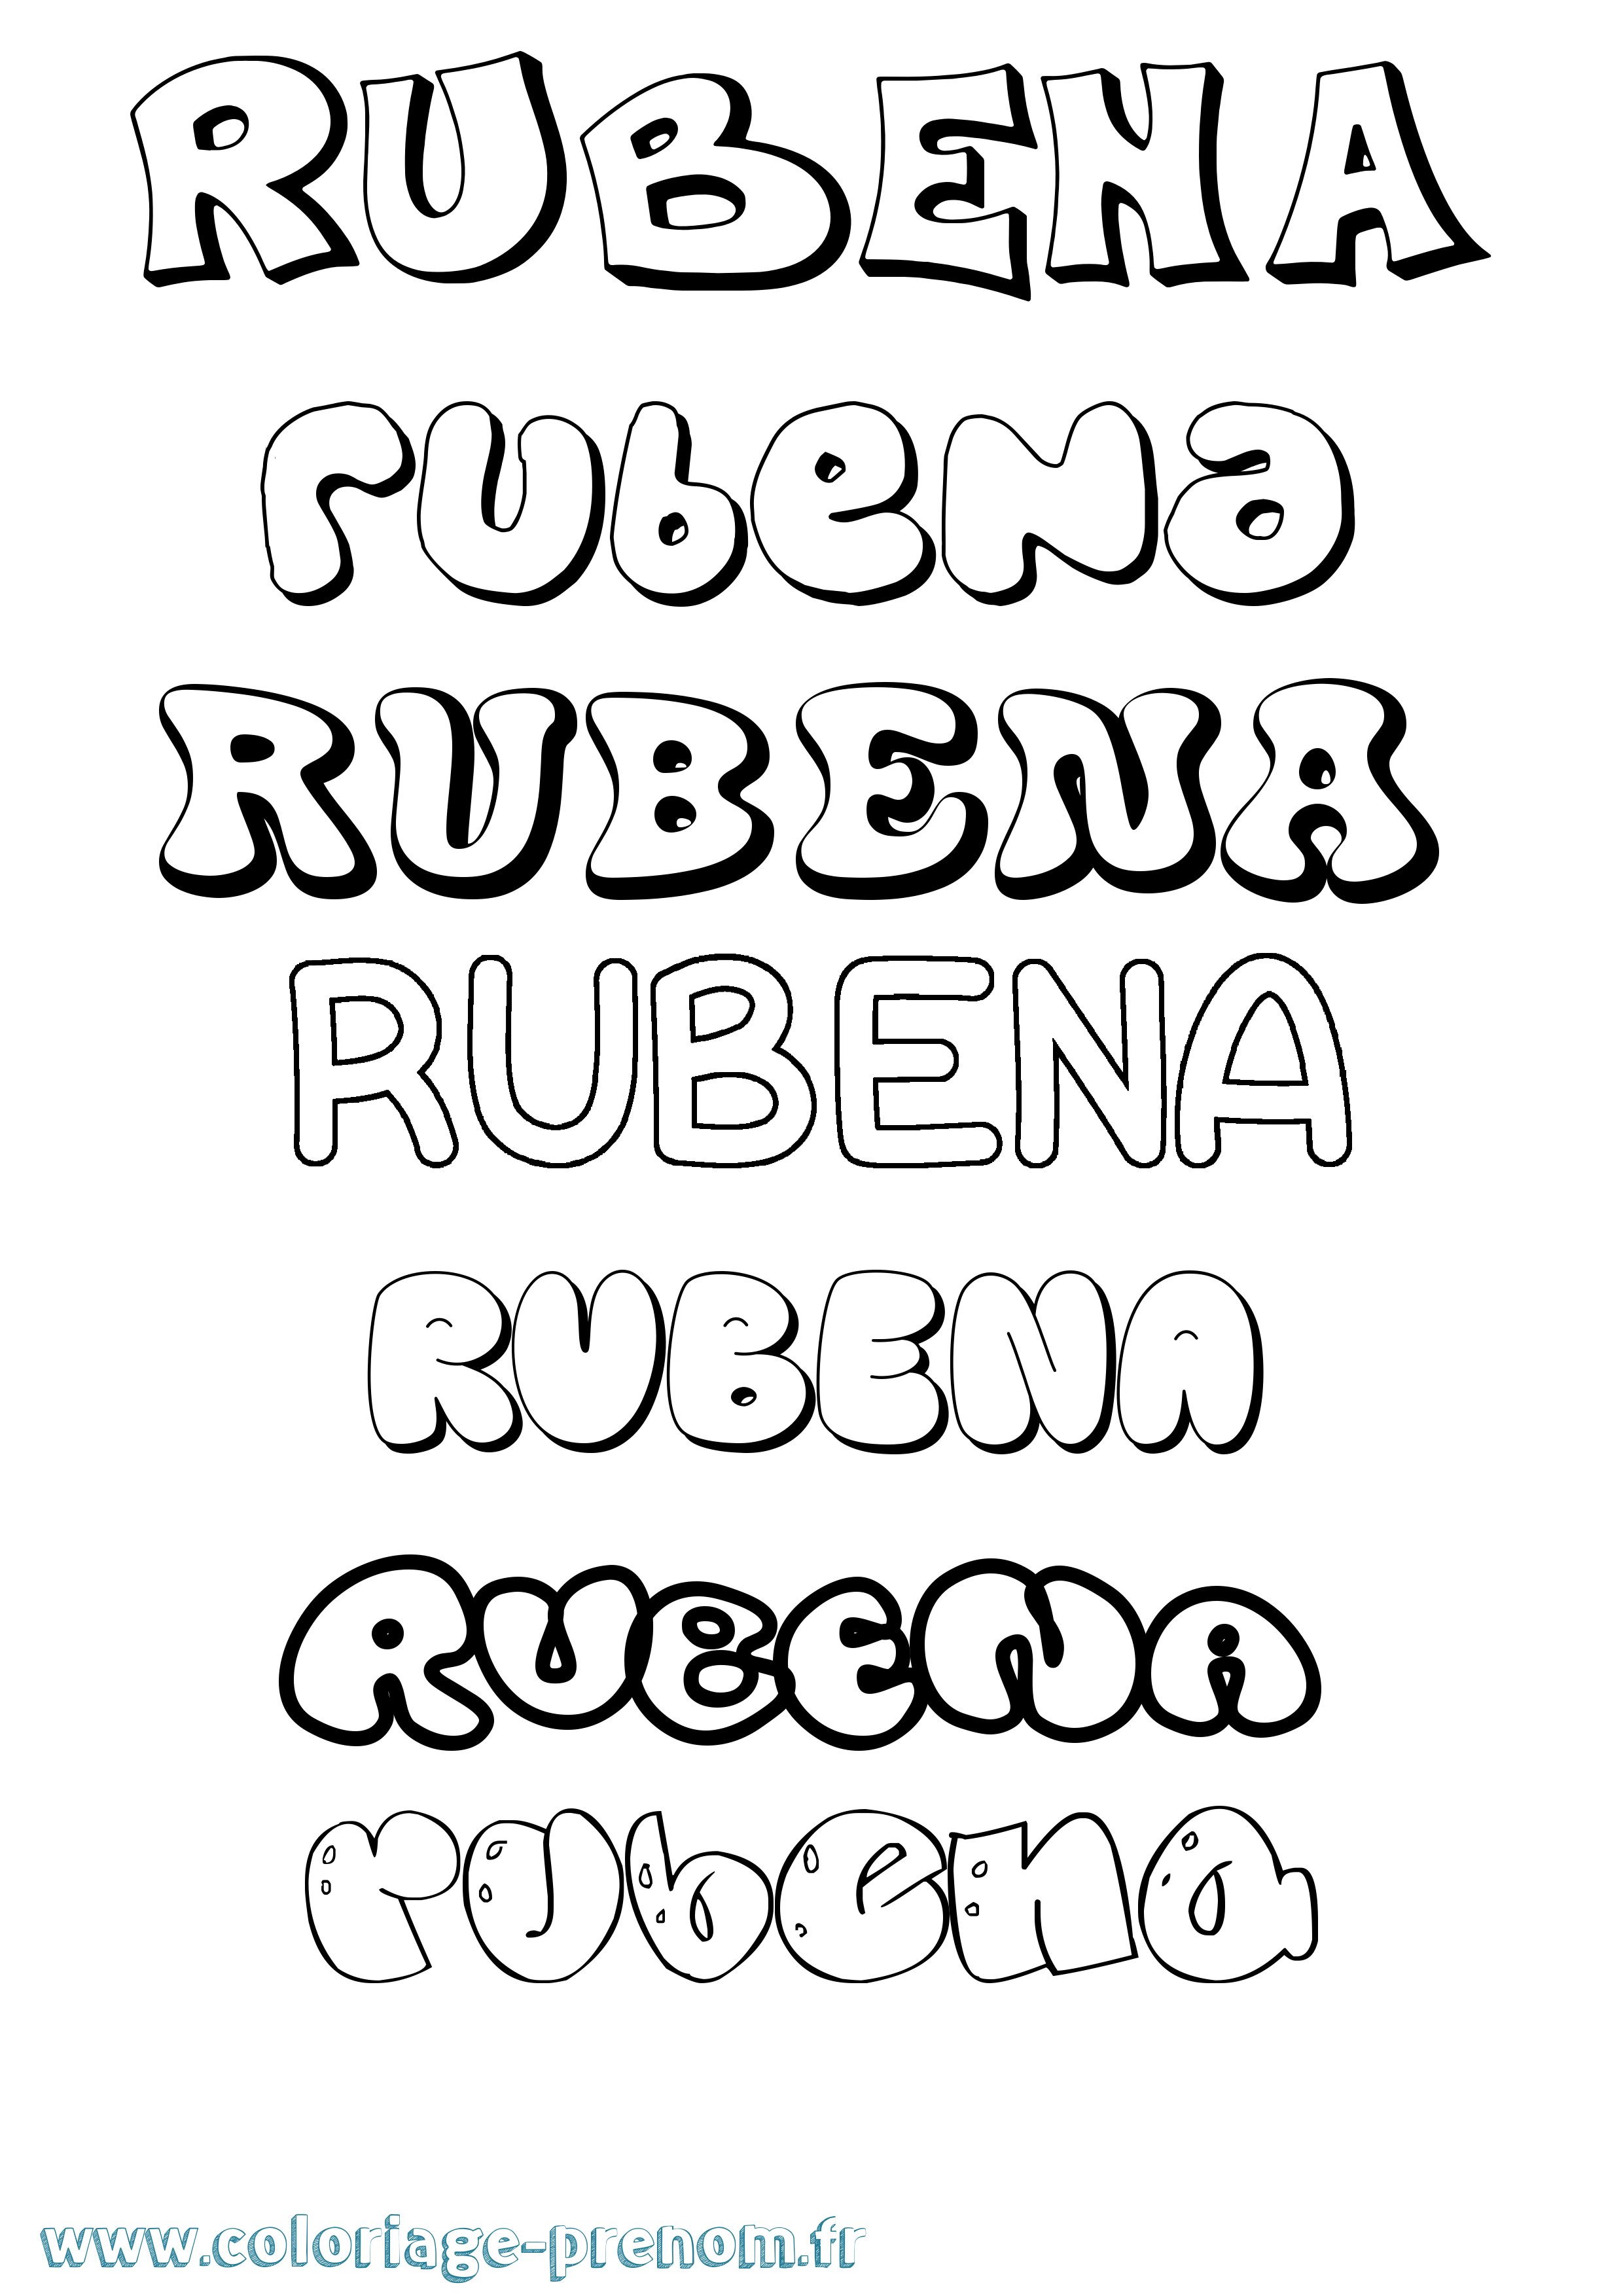 Coloriage prénom Rubena Bubble